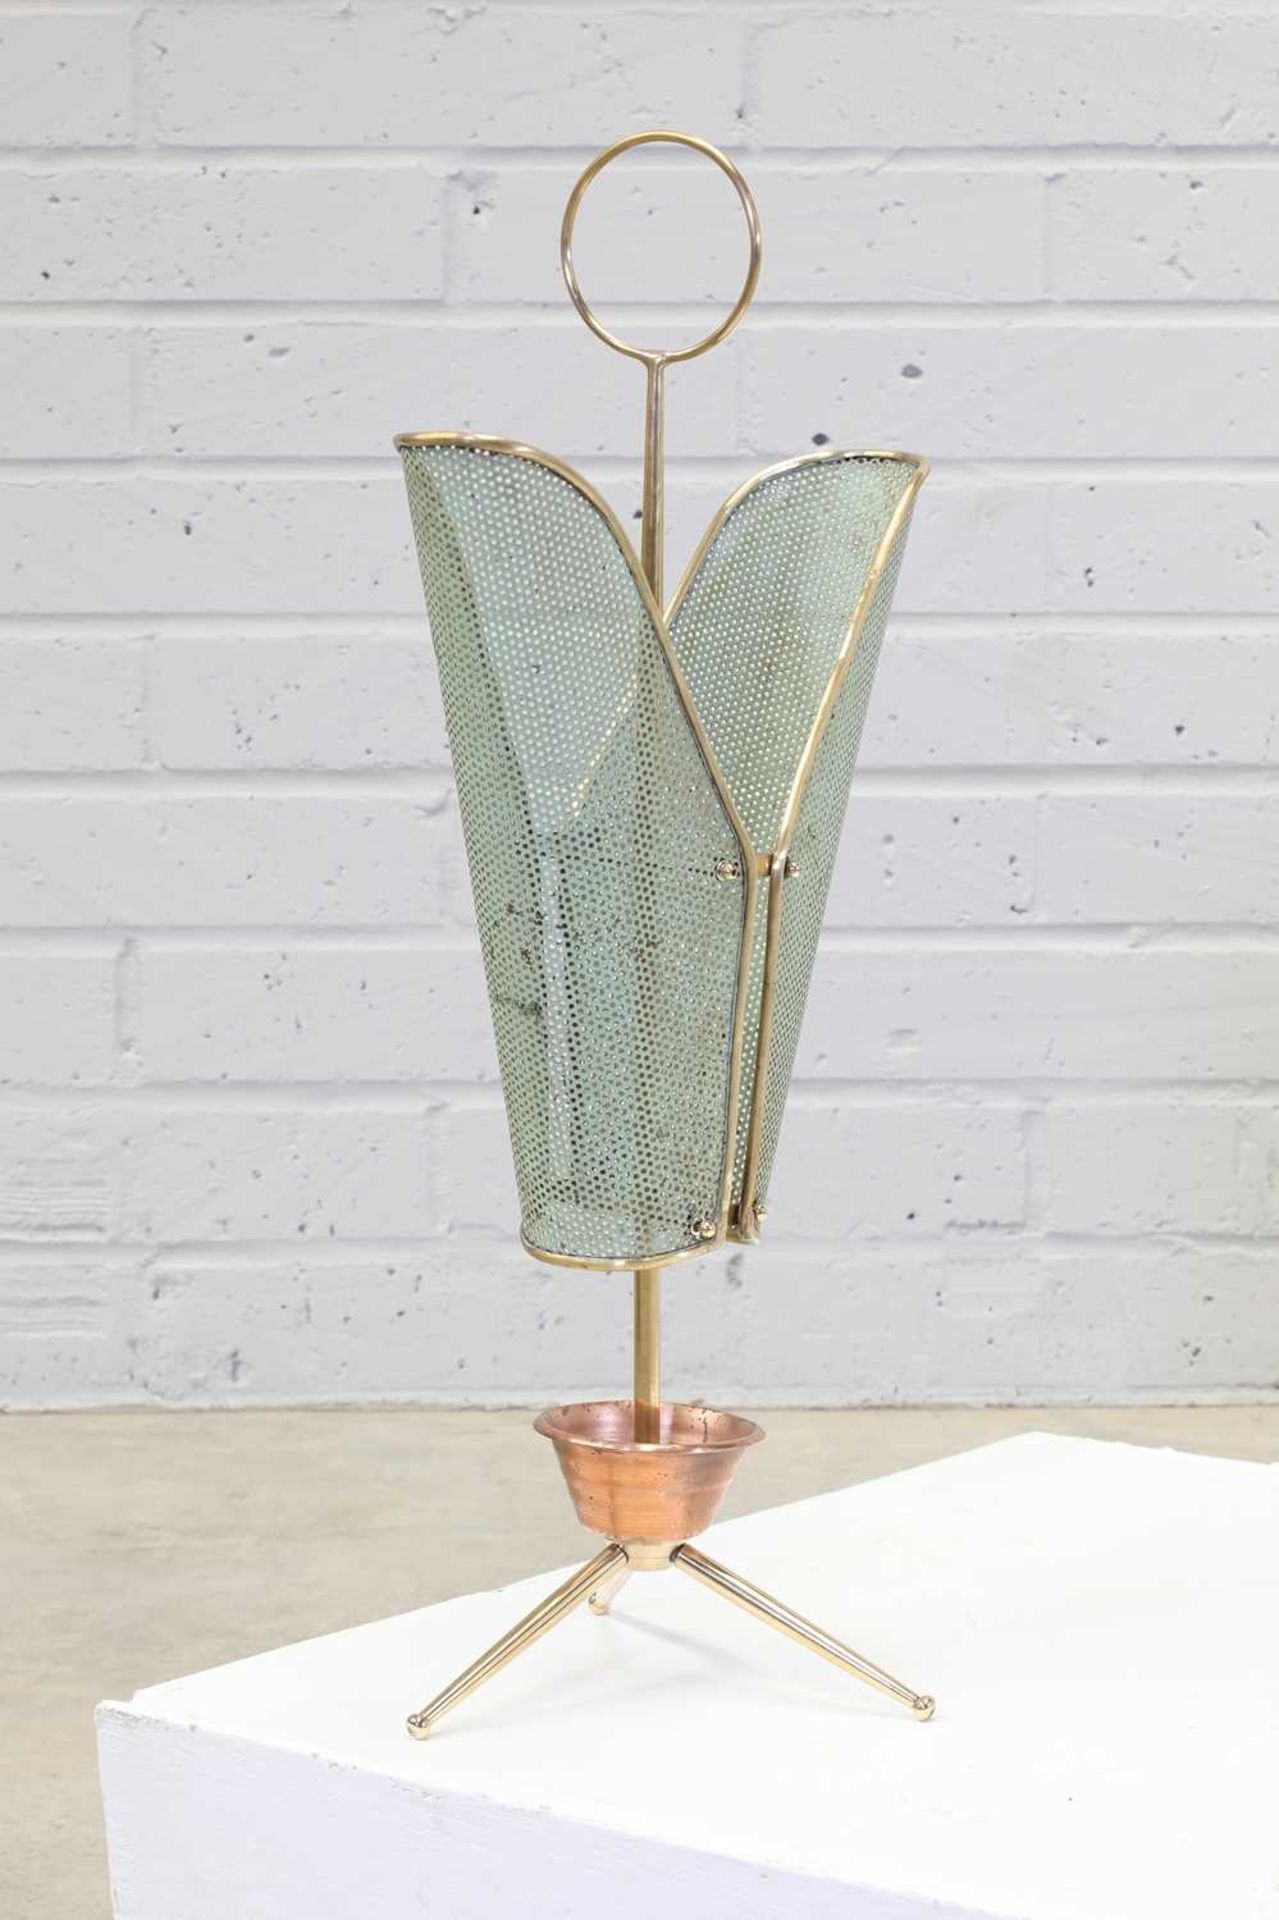 A brass and copper umbrella stand,